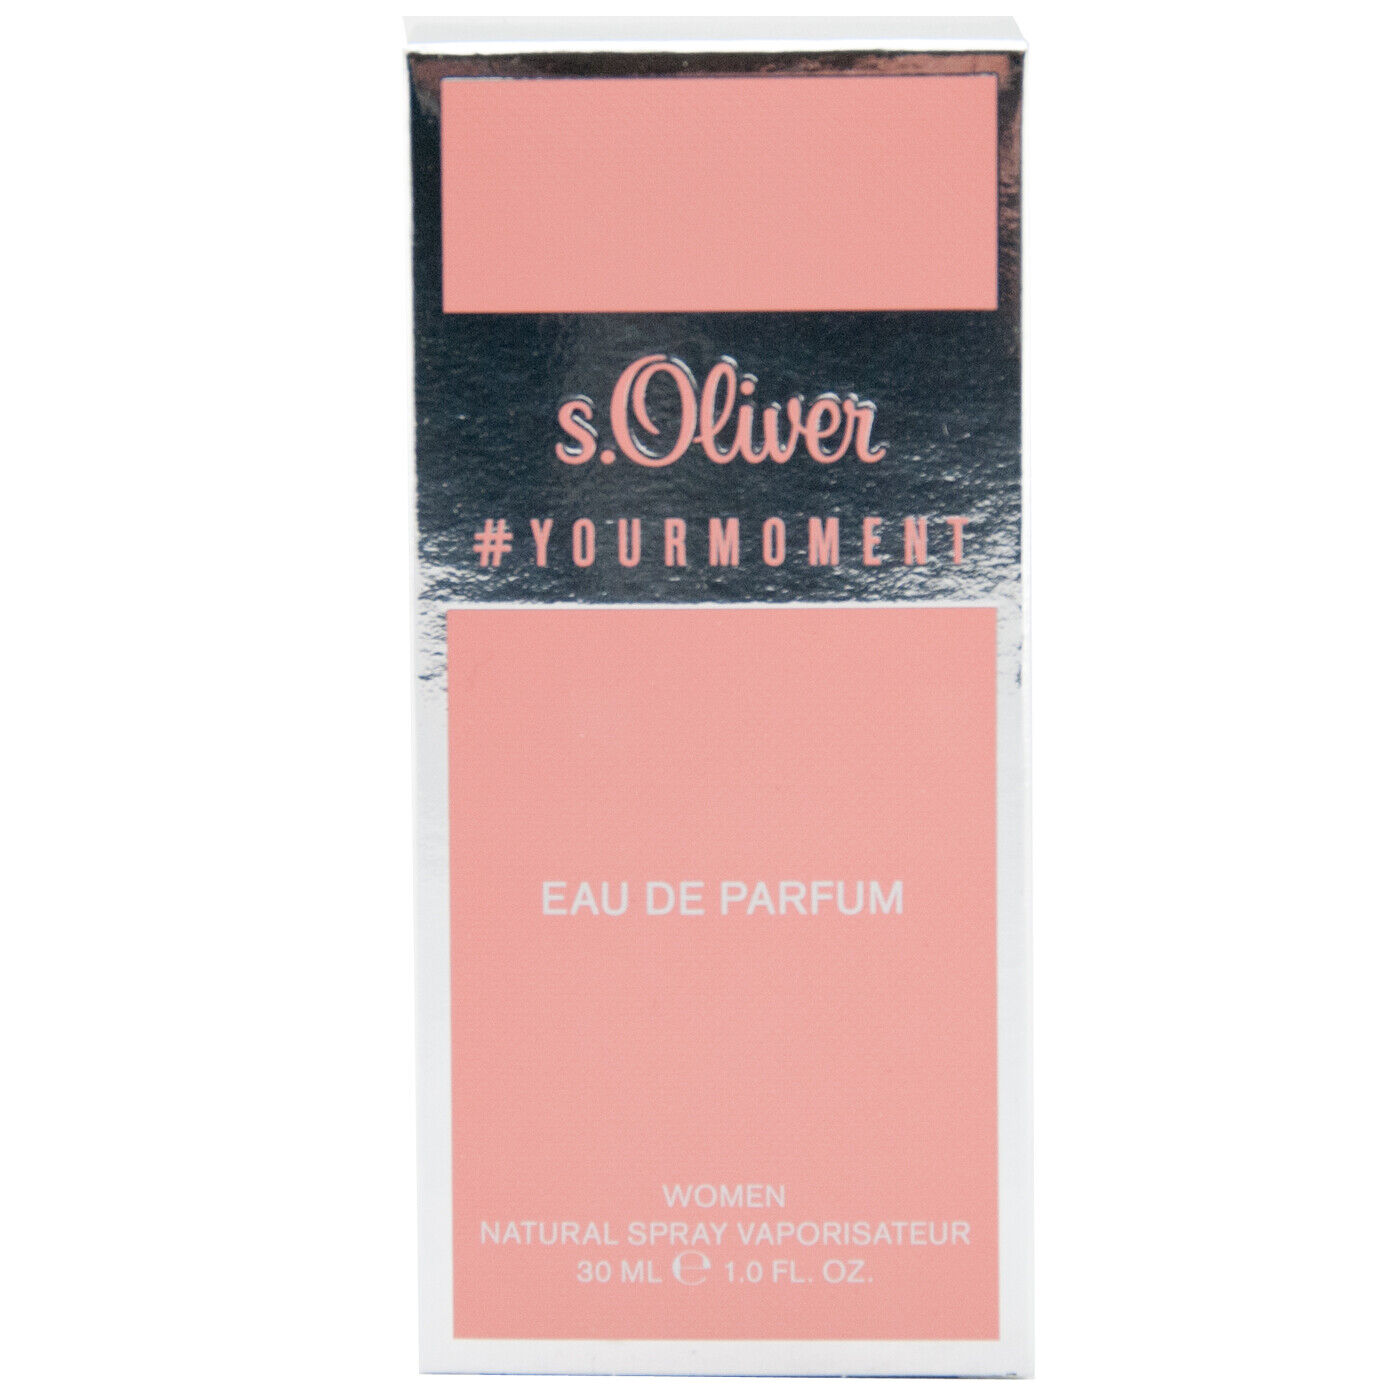 S.Oliver # Yourmoment 30ml Rapid rise Eau De Edp Woman for Perfume Washington Mall Spray